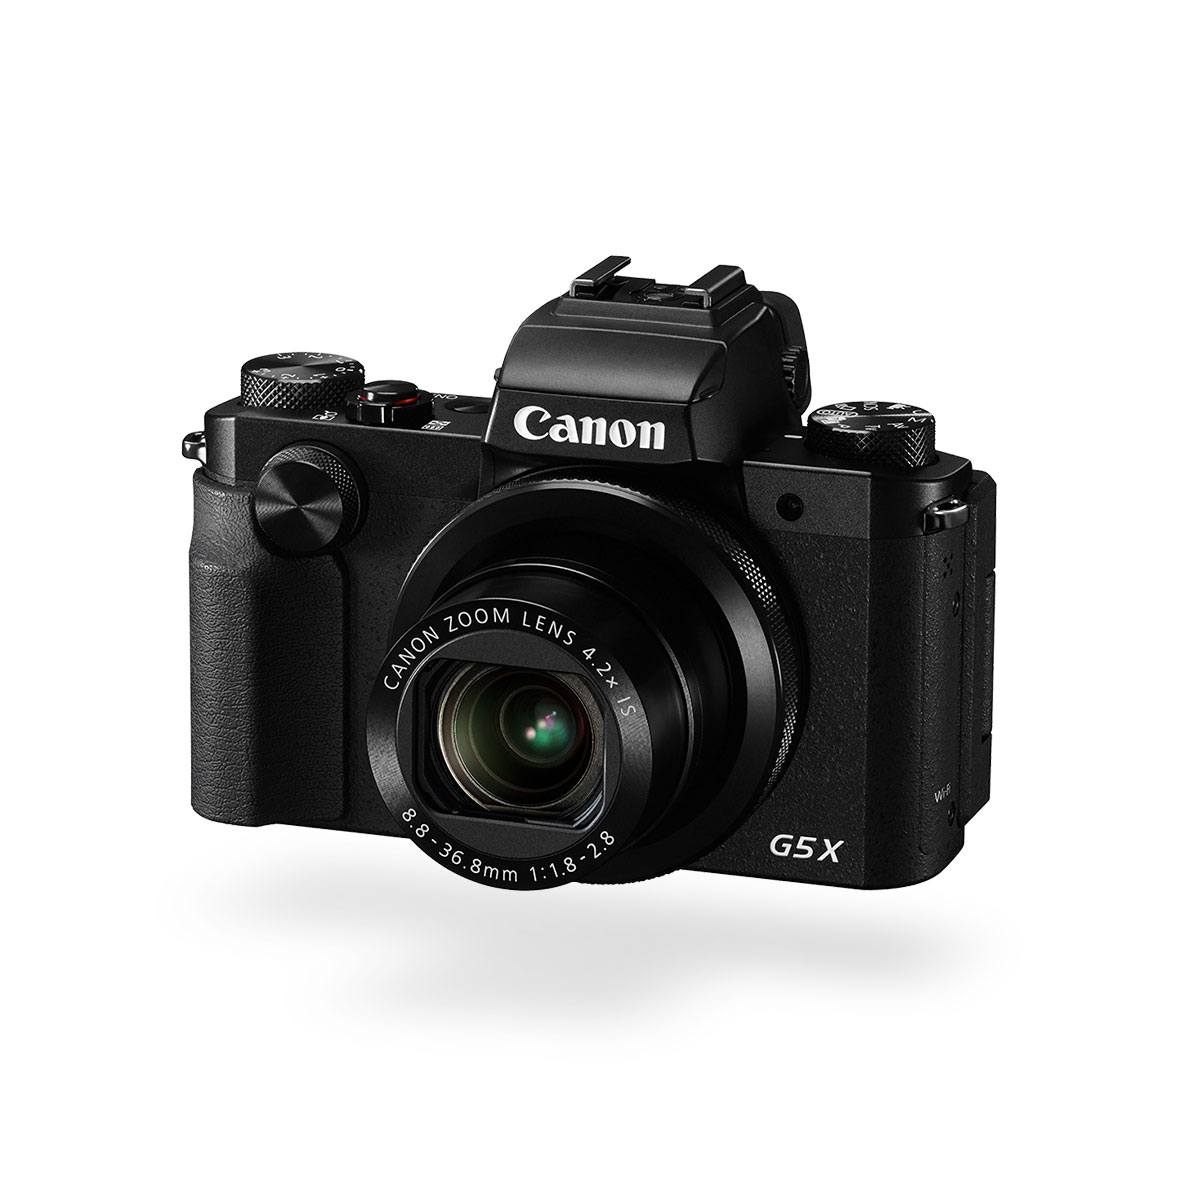 Canon PowerShot G5 X black front angled